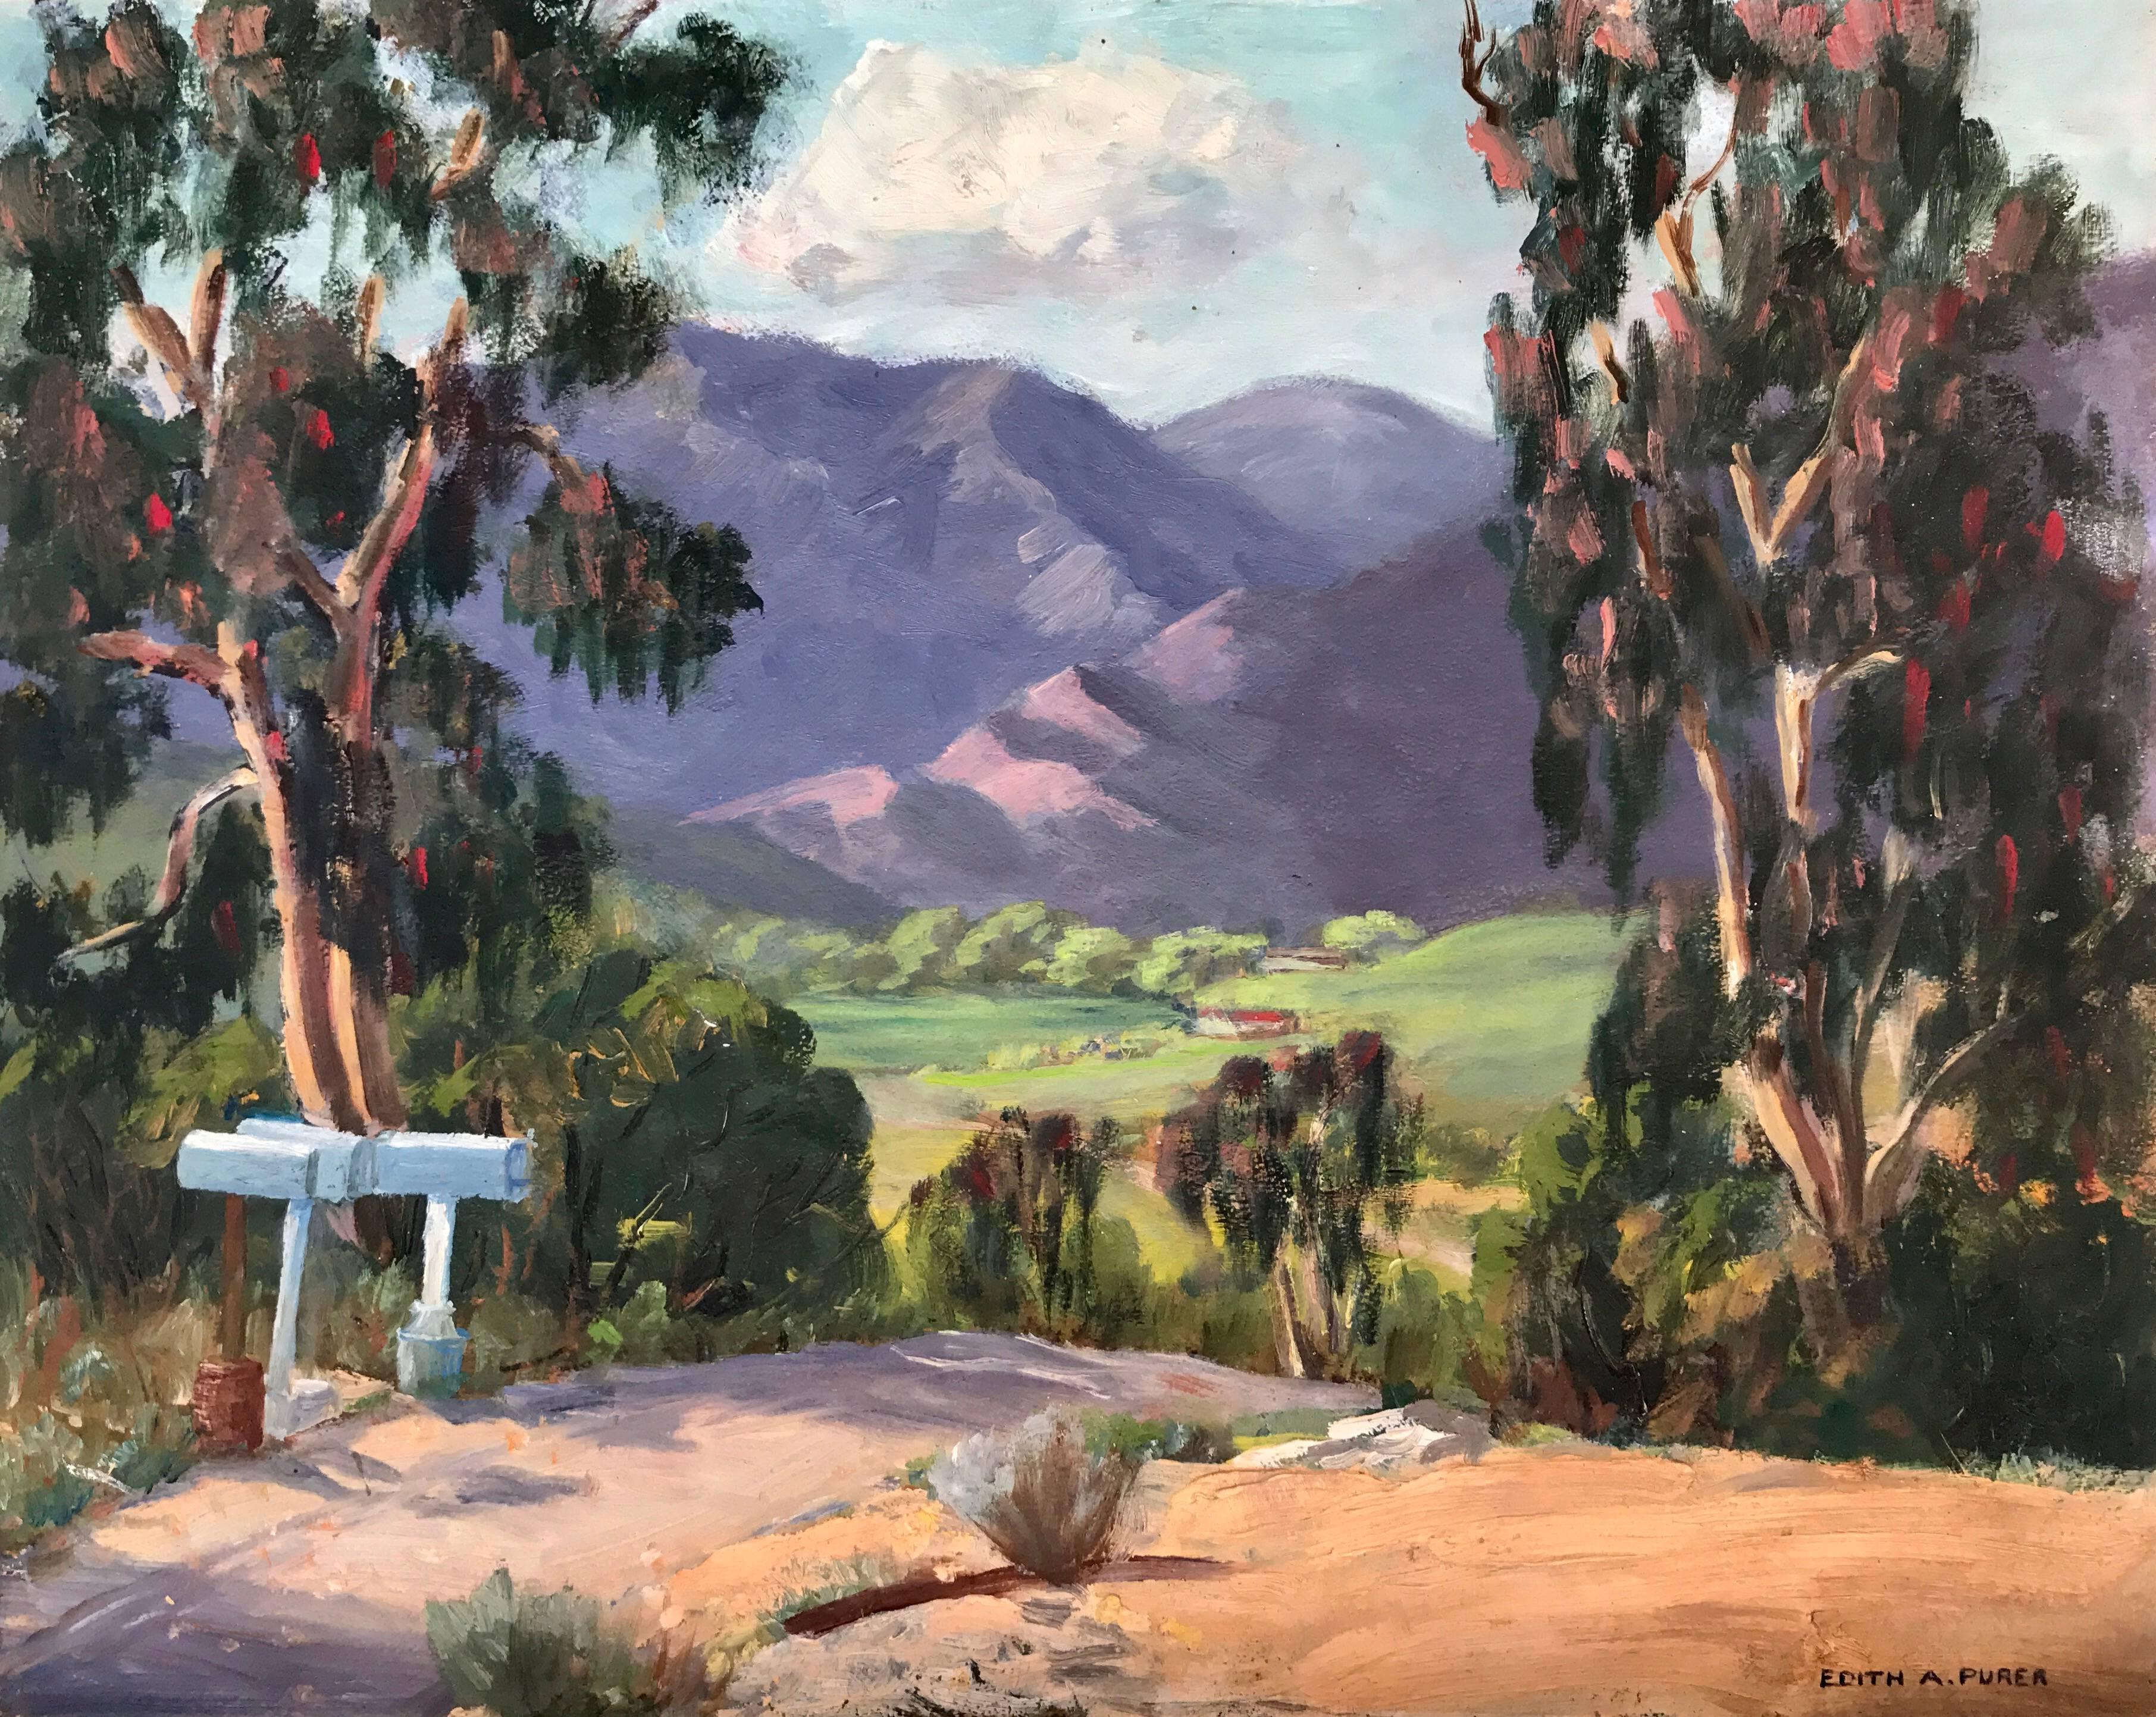 Edith Abigail Purer Landscape Painting - "Route One, Escondido"